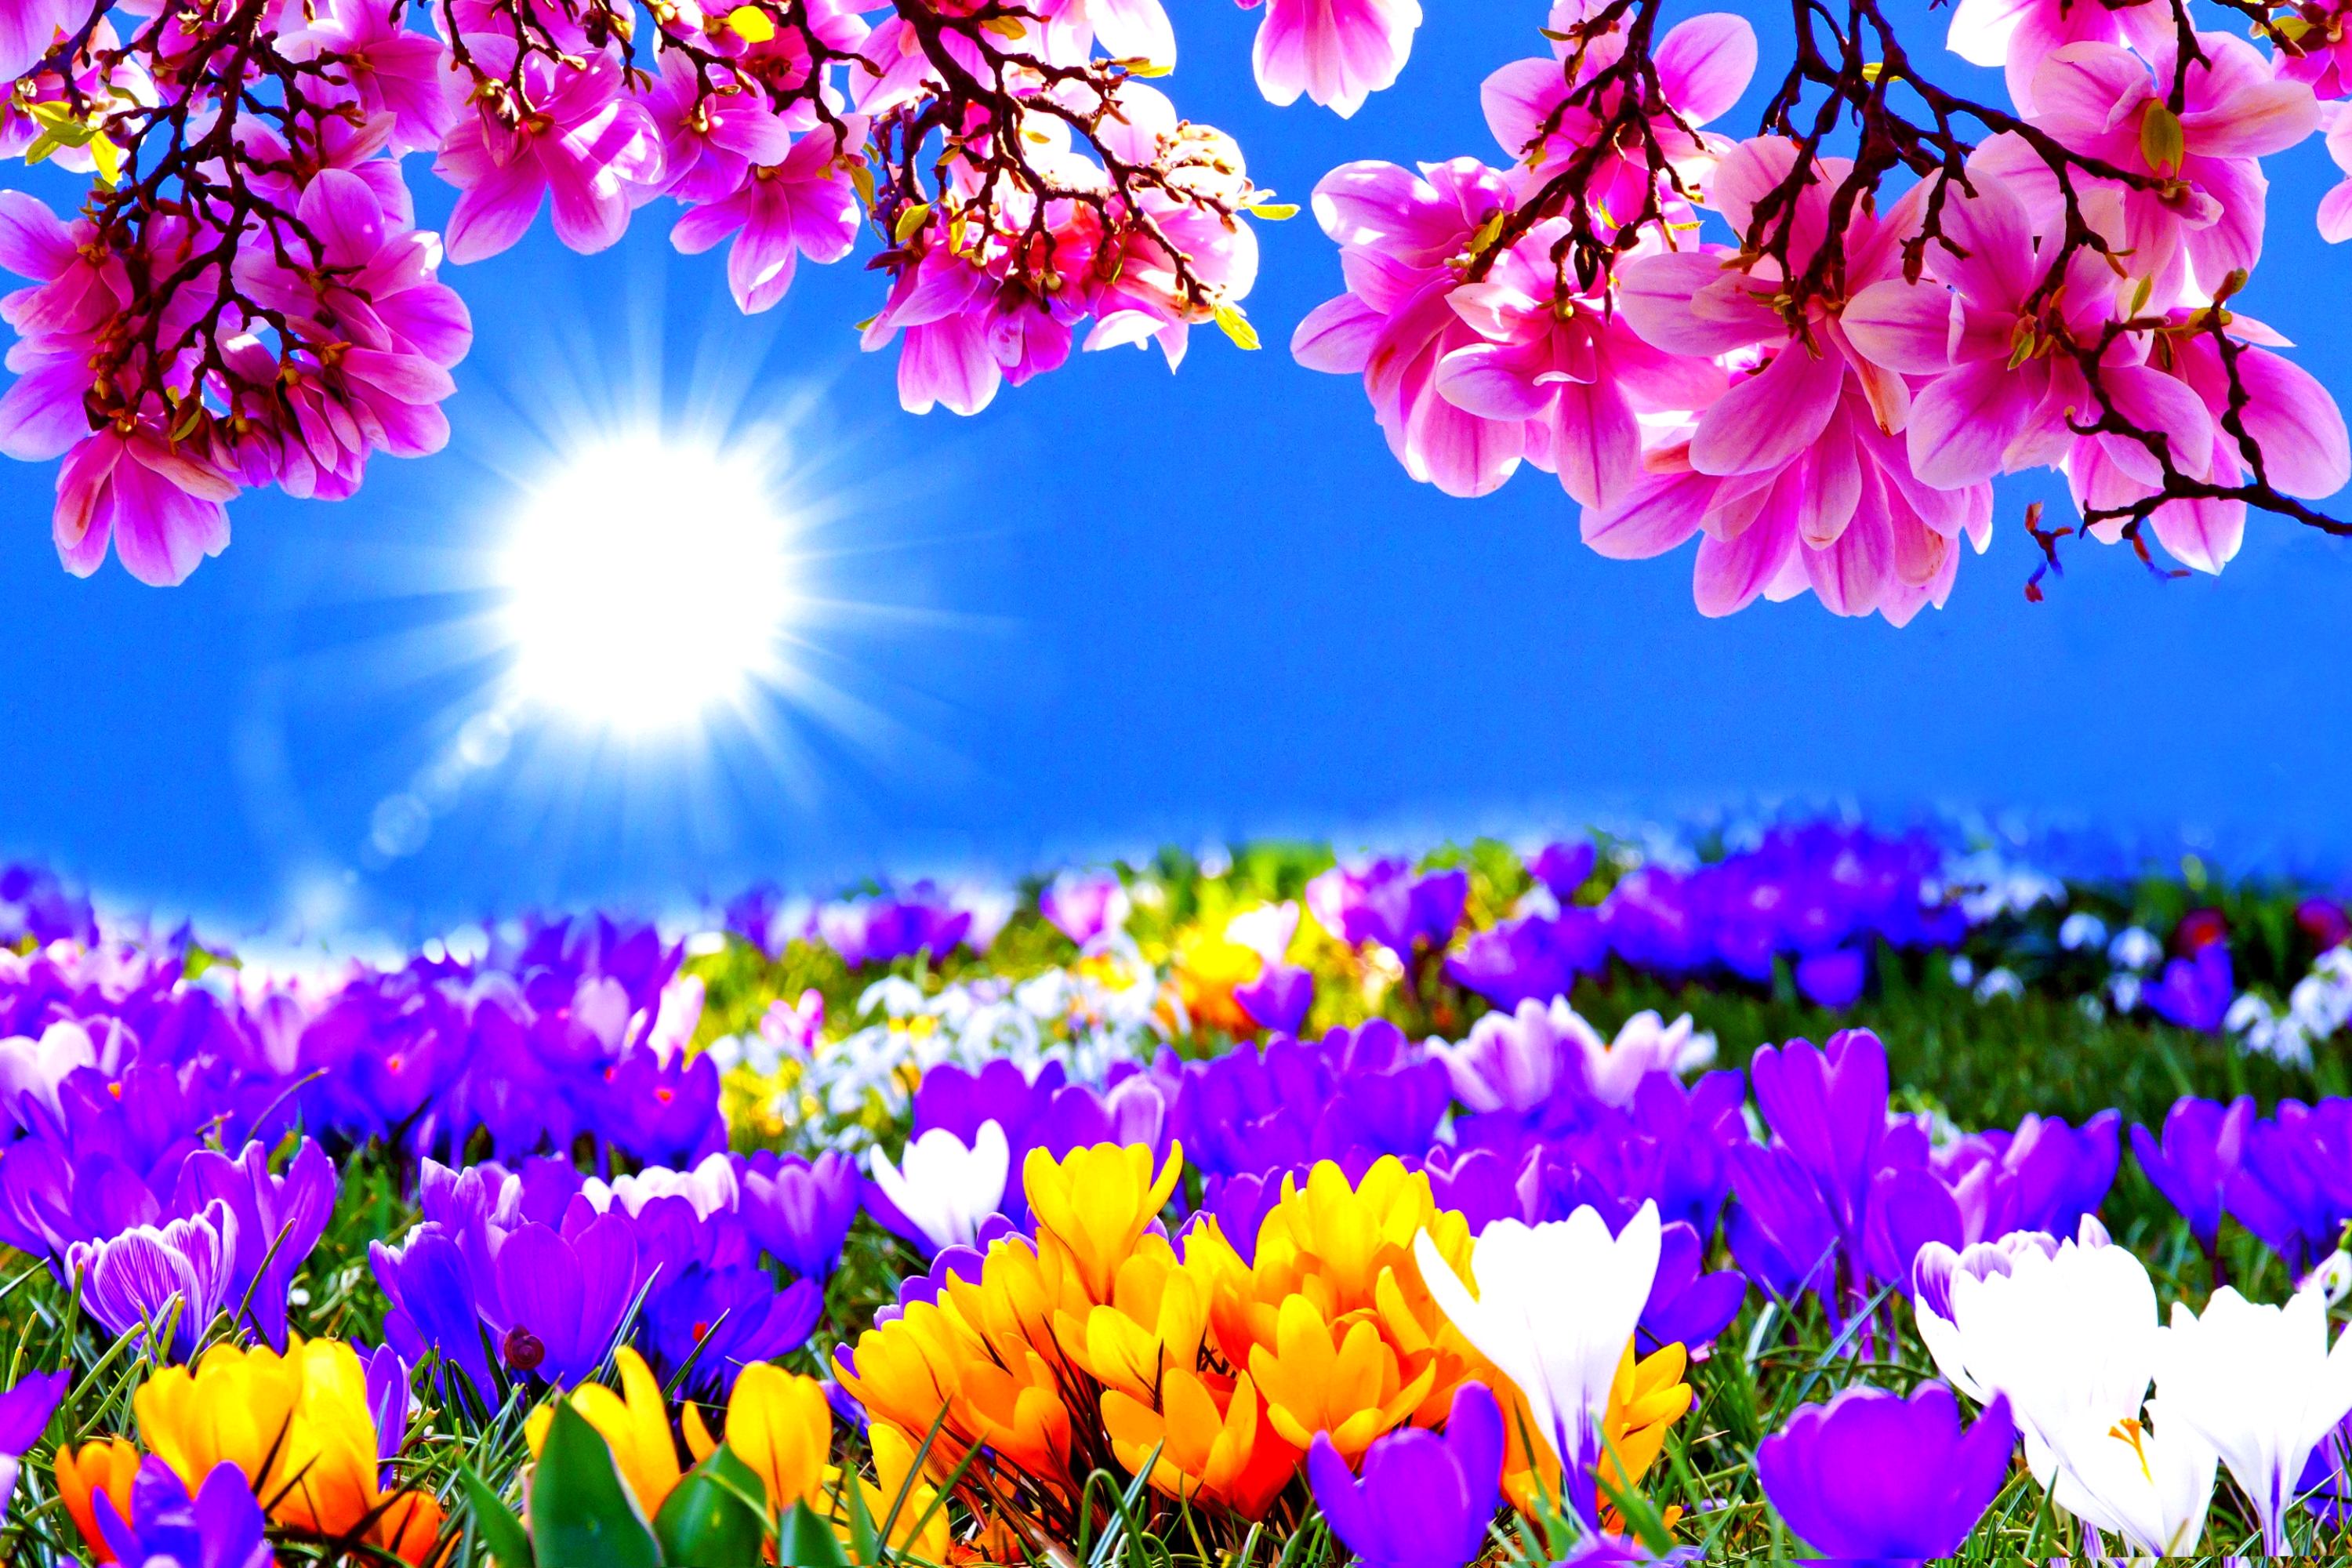 Natural Images, Flowers, Cute Desktop Images, Nature Background ...